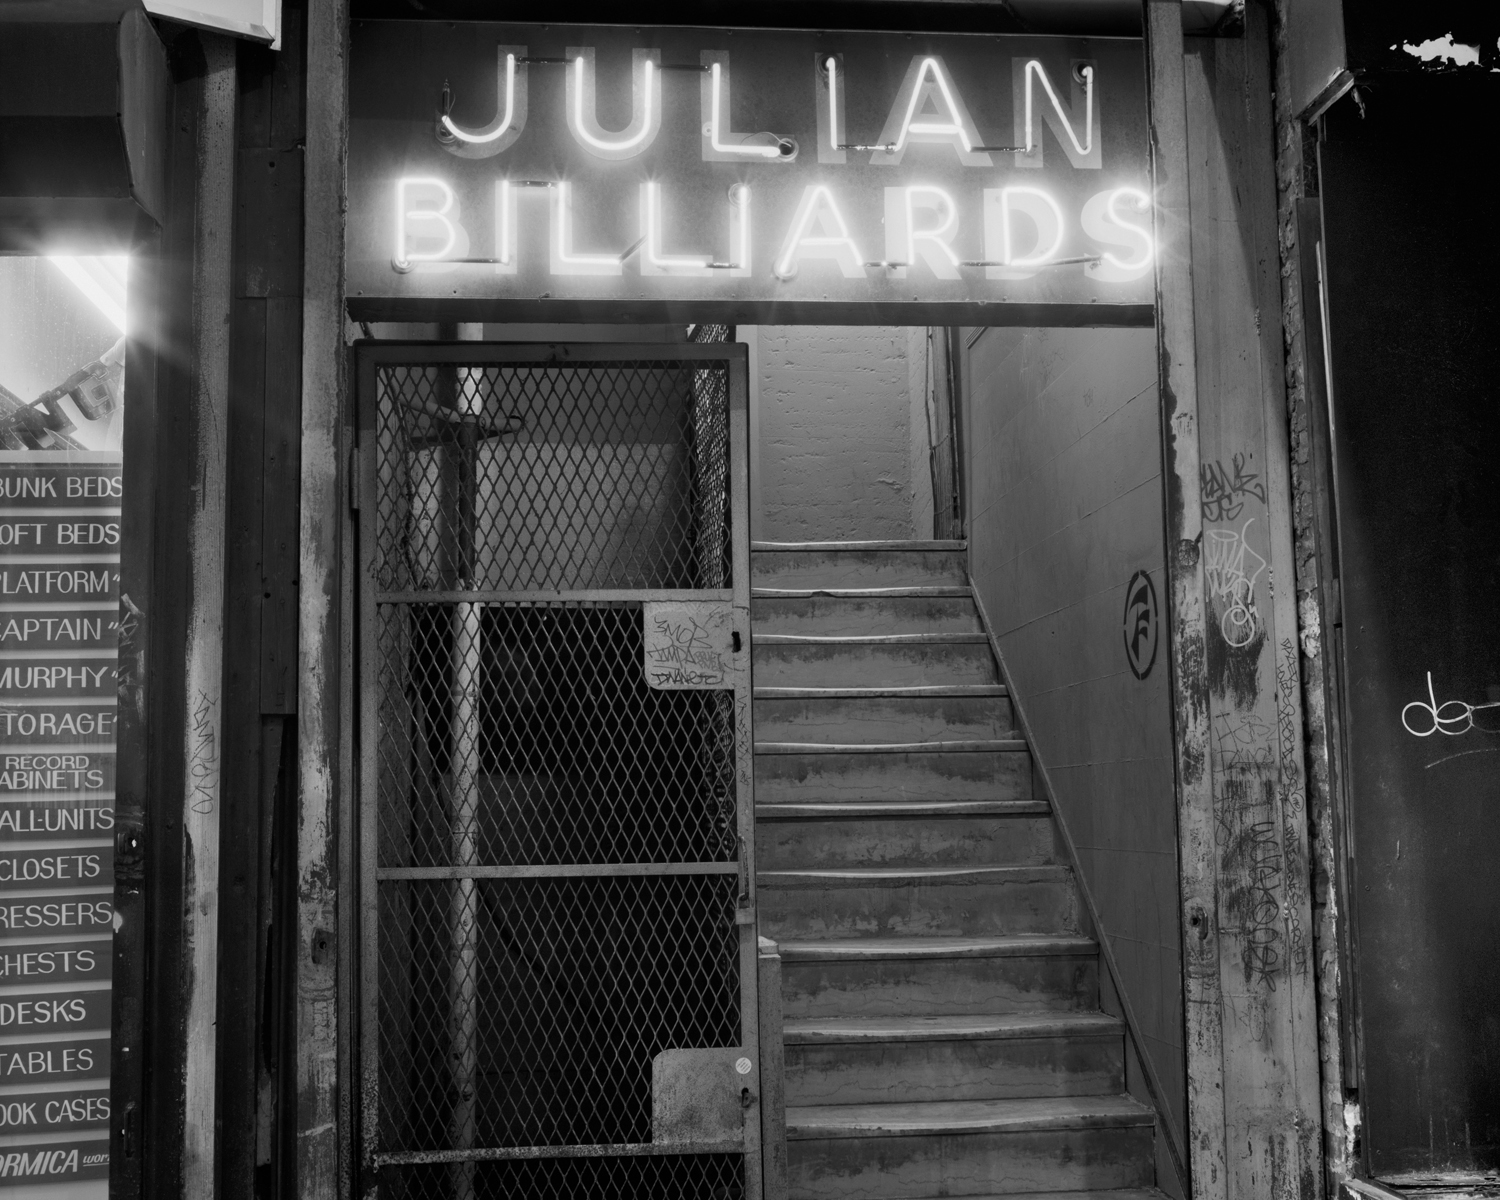 Julian Billiards